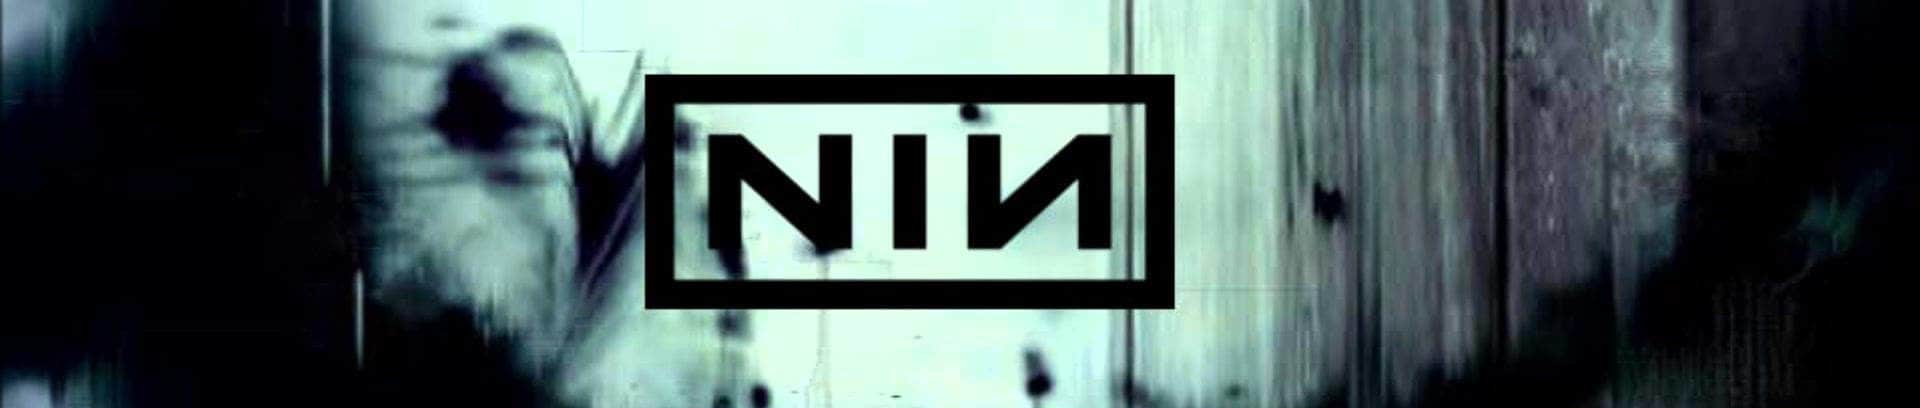 Nine Inch Nails - 90's band